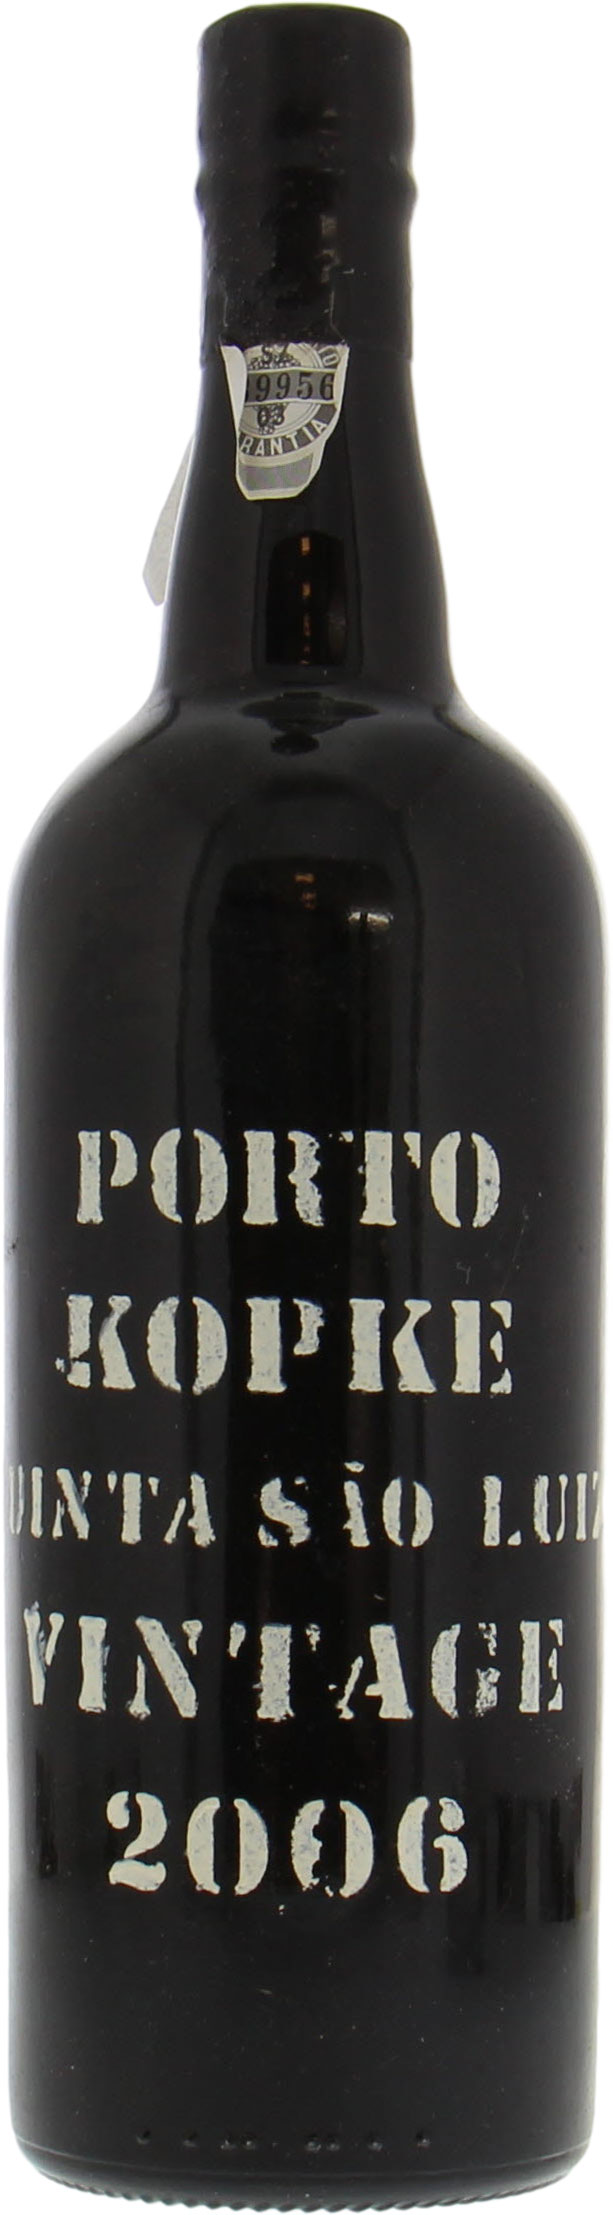 Kopke - Vintage Port 2006 Perfect